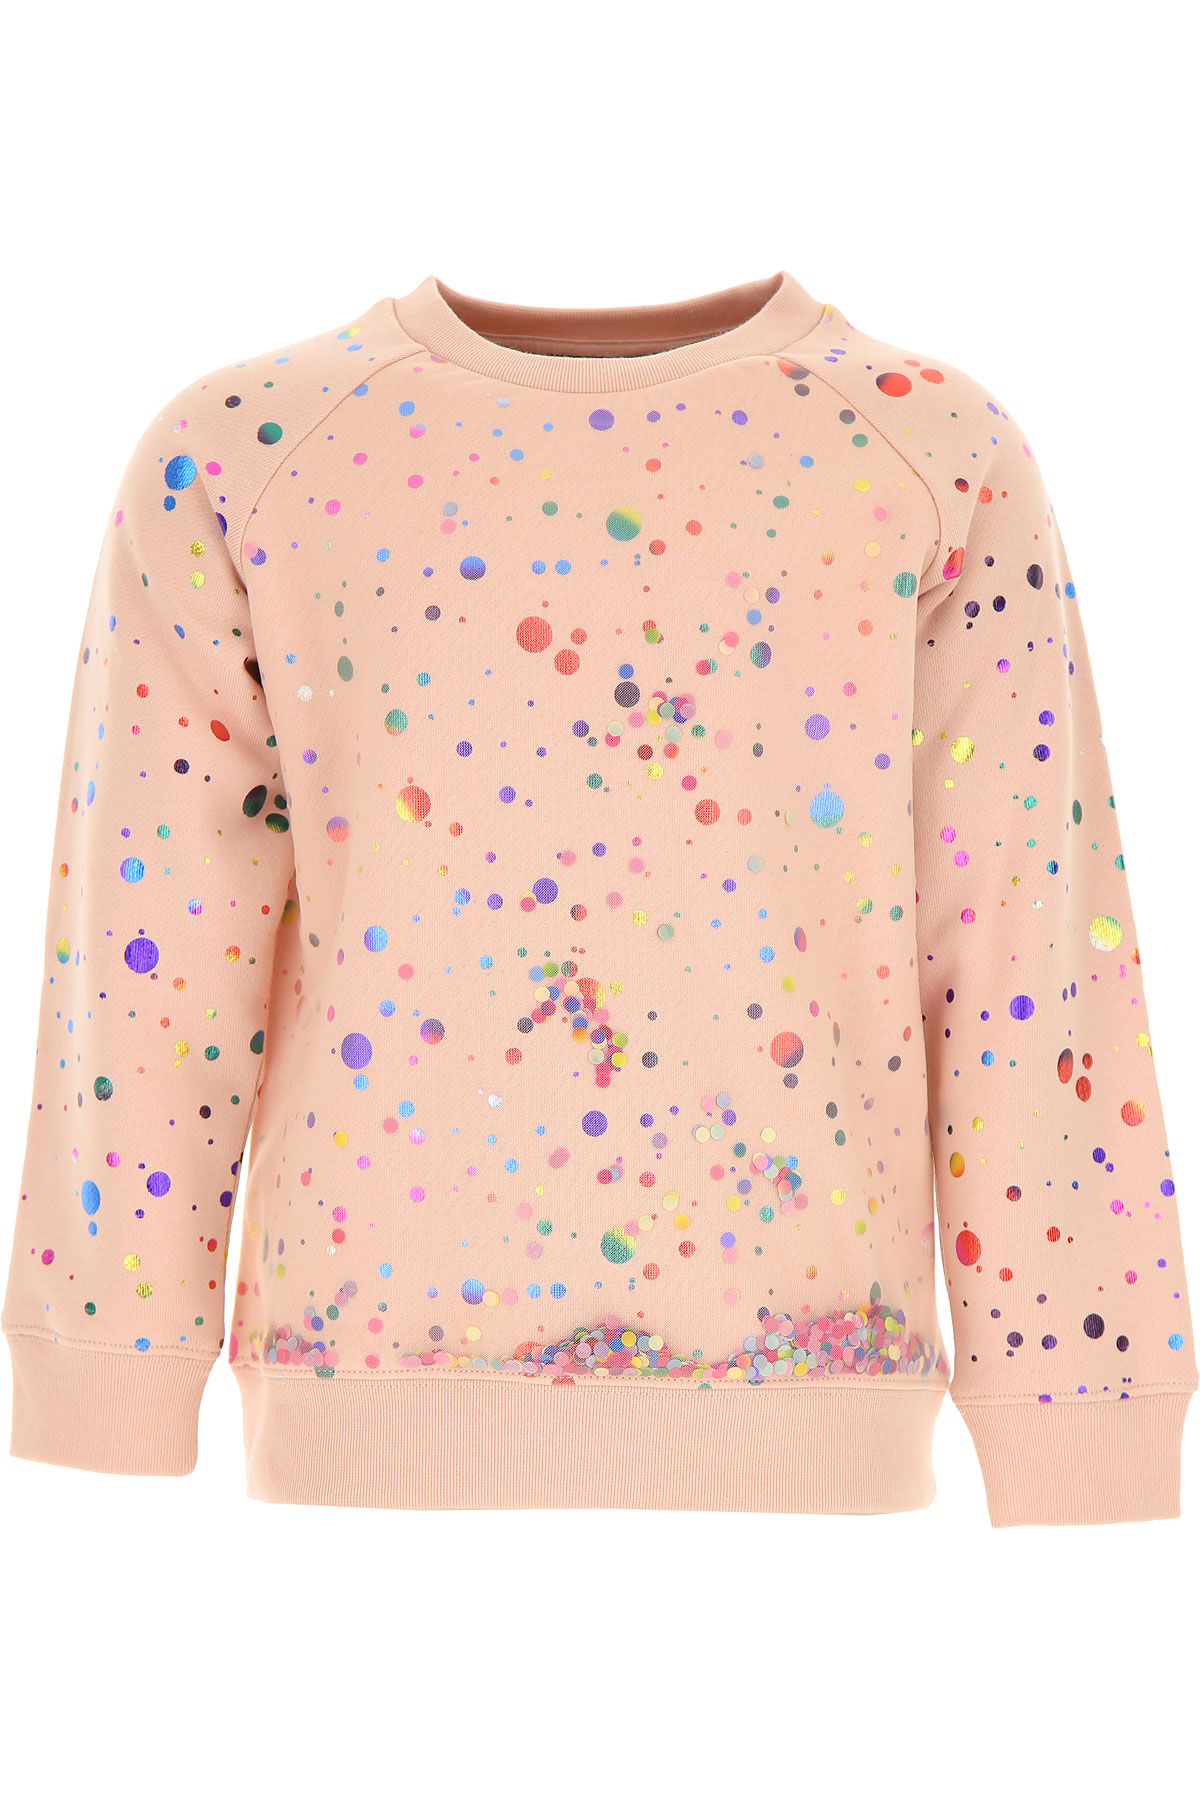 Stella McCartney Kinder Sweatshirt & Kapuzenpullover für Mädchen Günstig im Sale, Pfingstrose, Baumwolle, 2017, 10Y 12Y 16Y 4Y 6Y